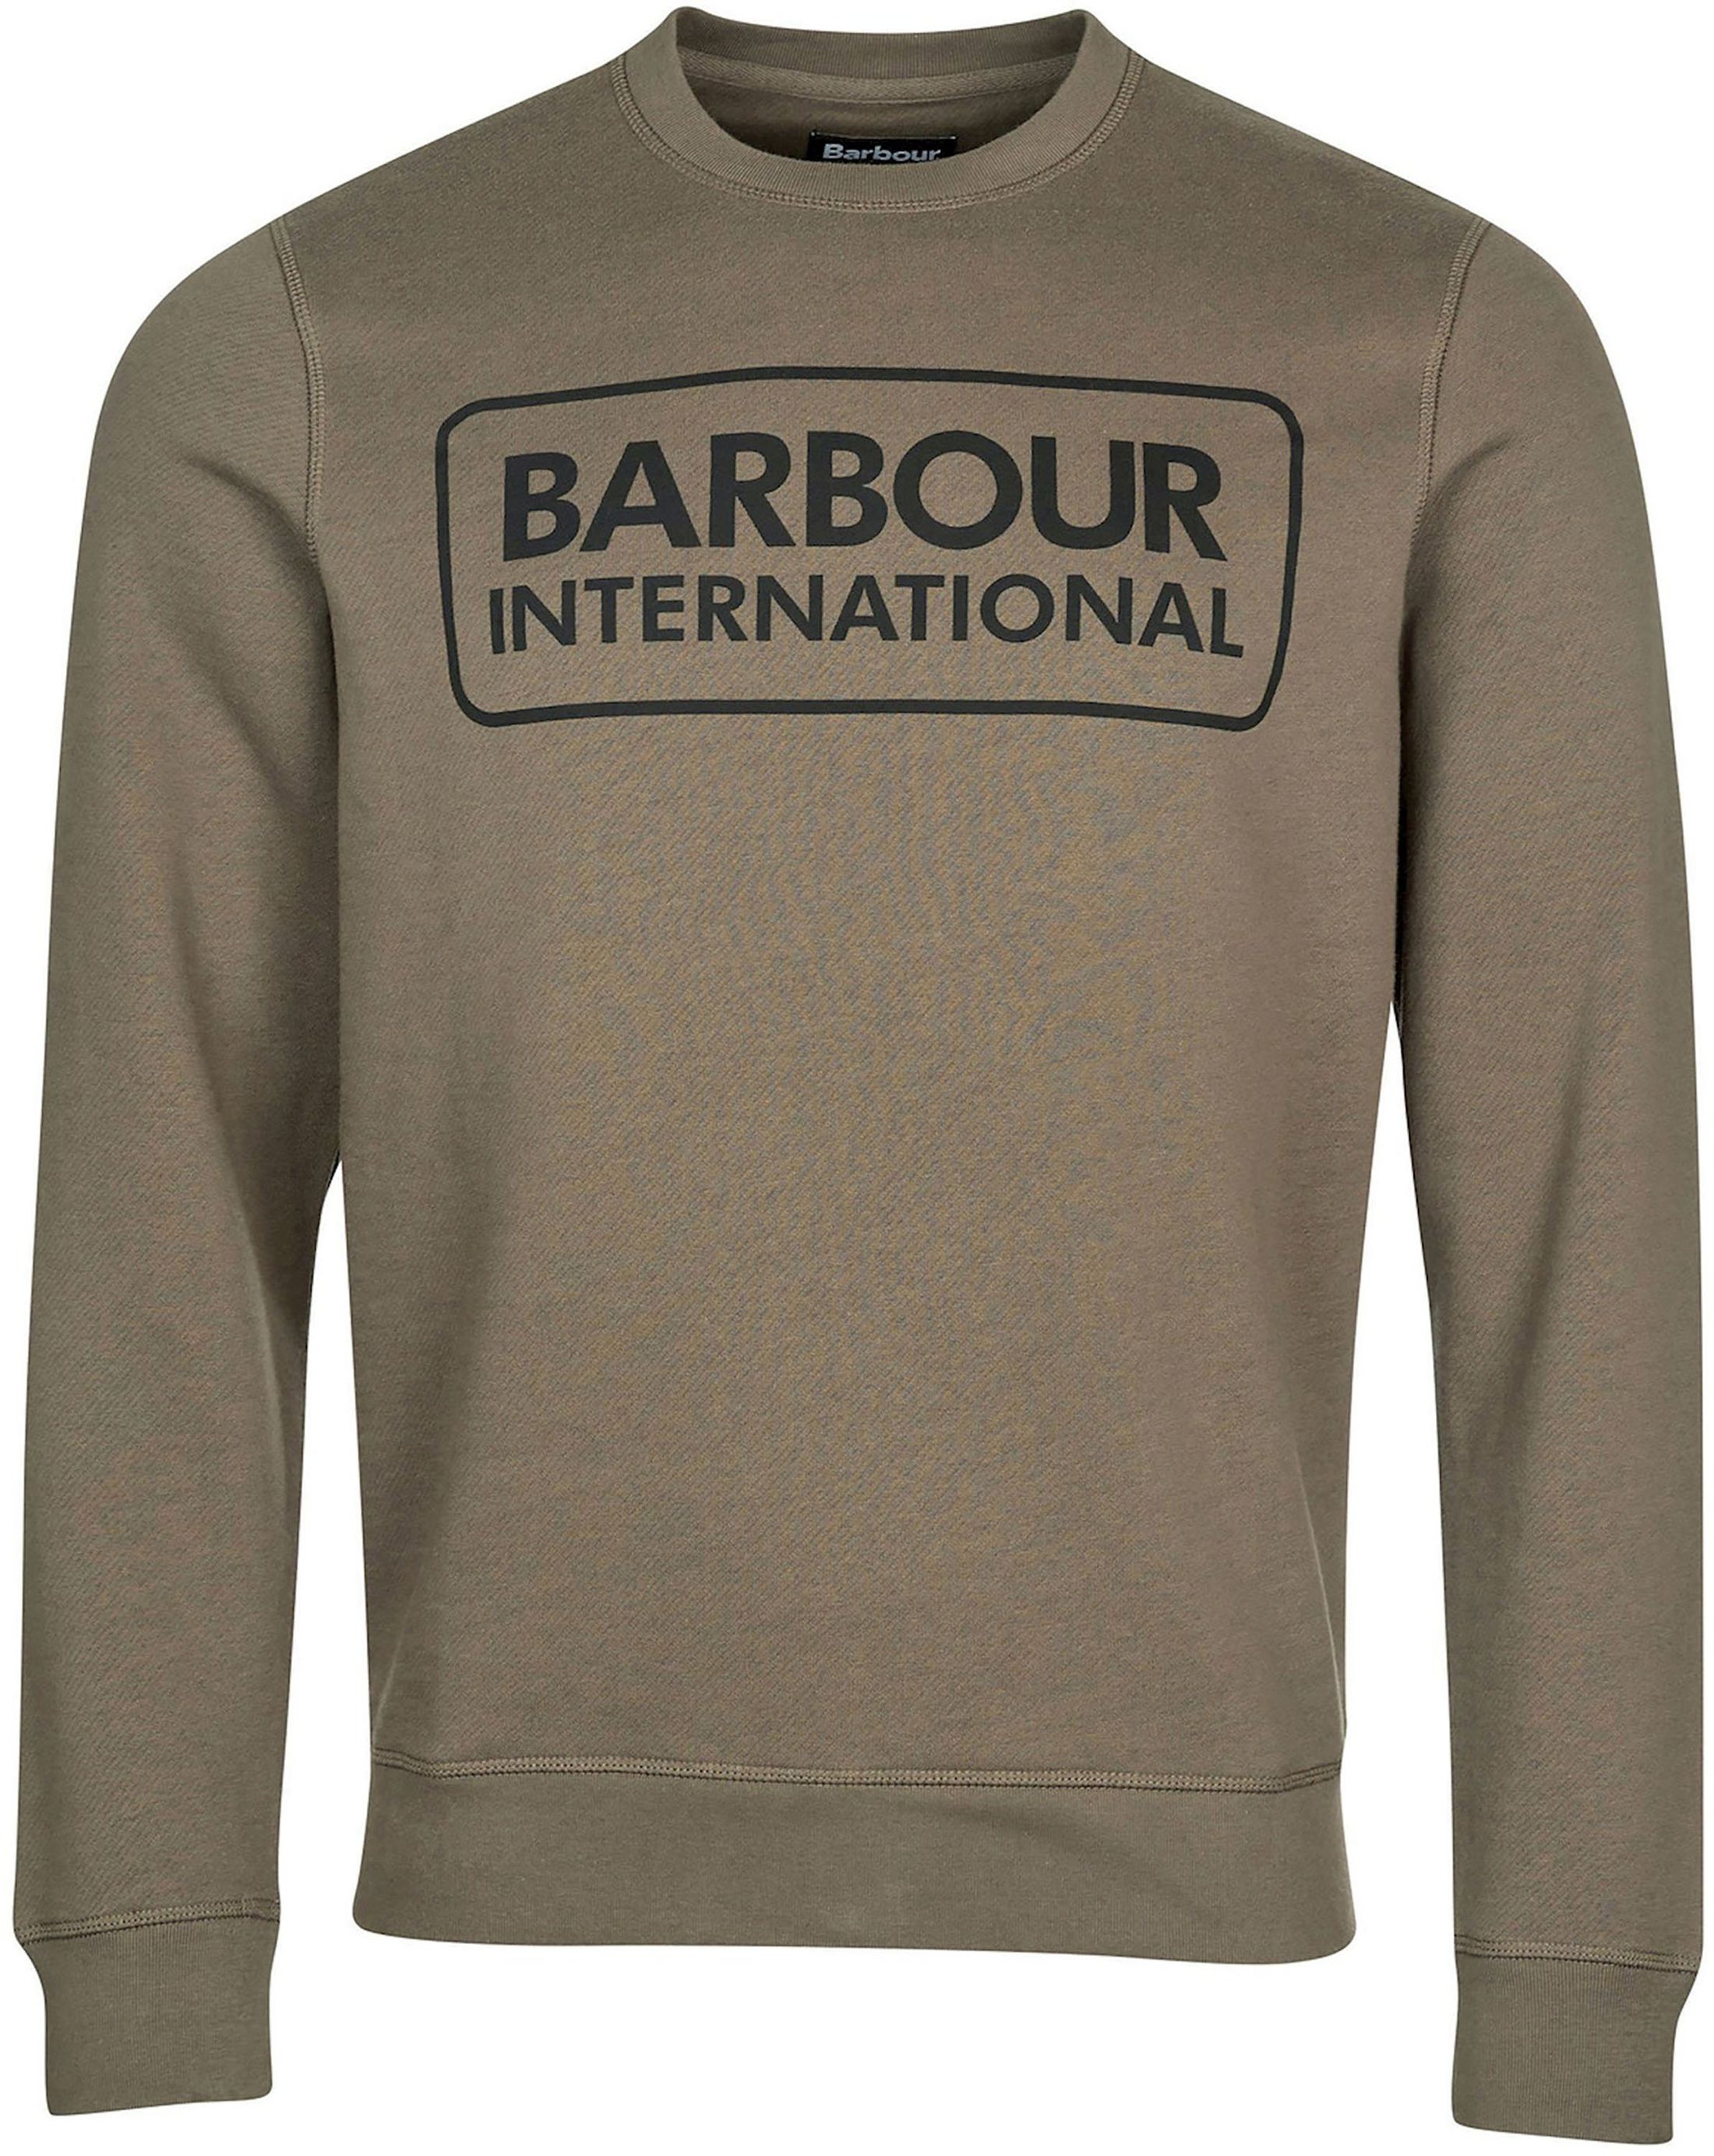 Barbour International Sweater Logo Khaki size L